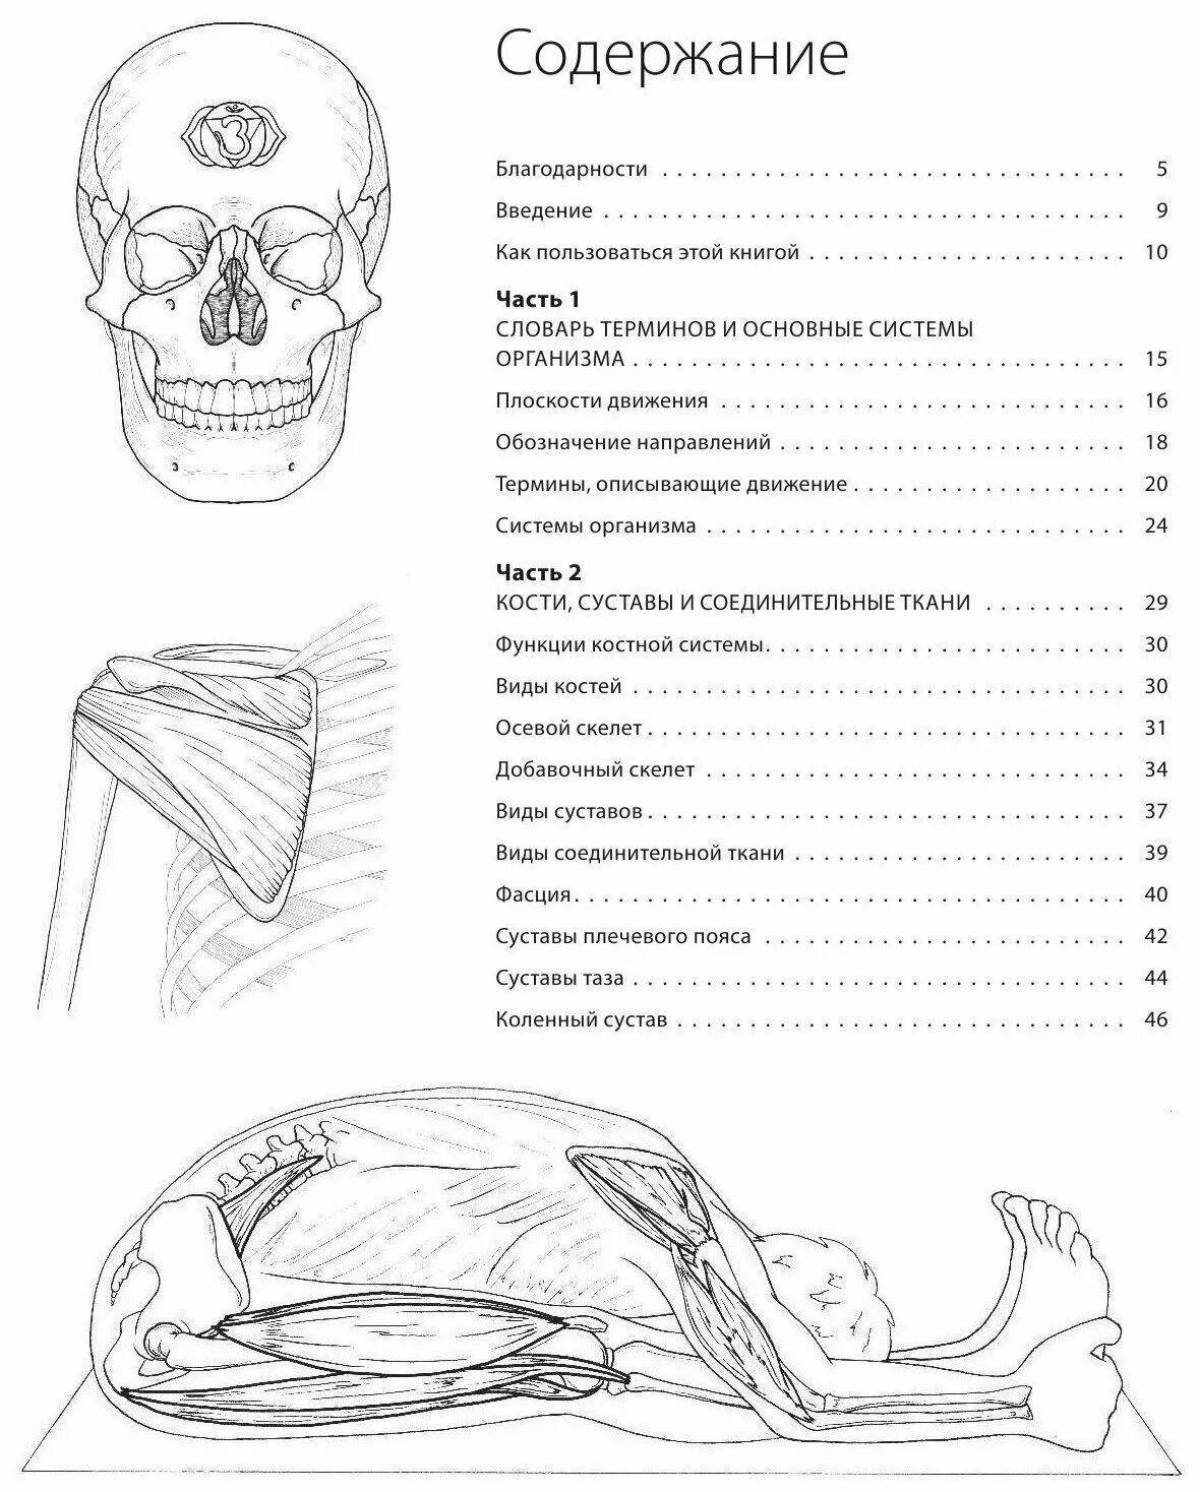 Coloring book radiant anatomical atlas